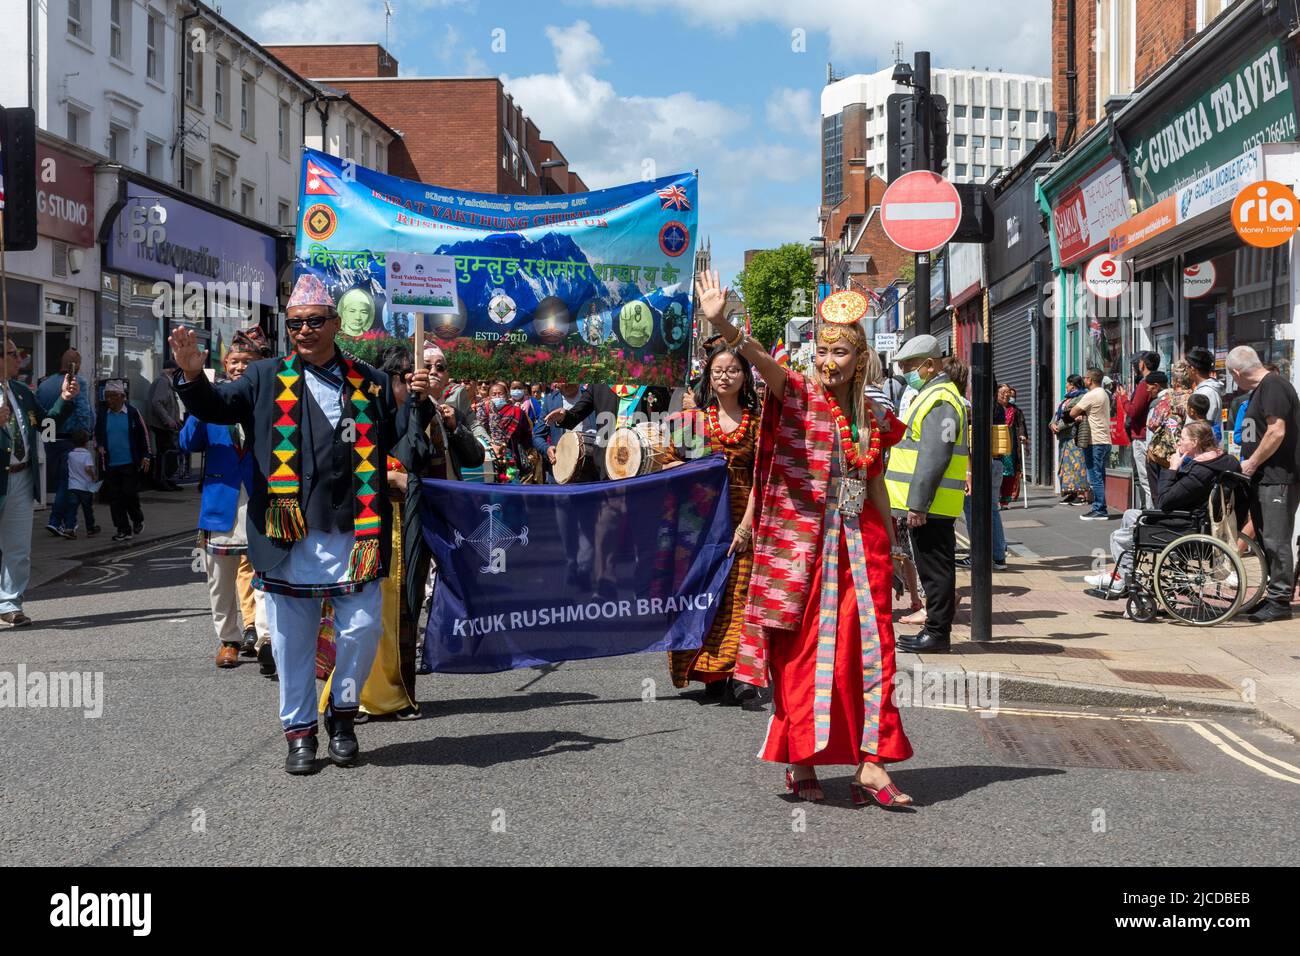 Kirat Yakthung Chumpung UK, etnia nepalí Limbu People, en el Grand Parade en Victoria Day, un evento anual en Aldershot, Hampshire, Inglaterra, Reino Unido Foto de stock